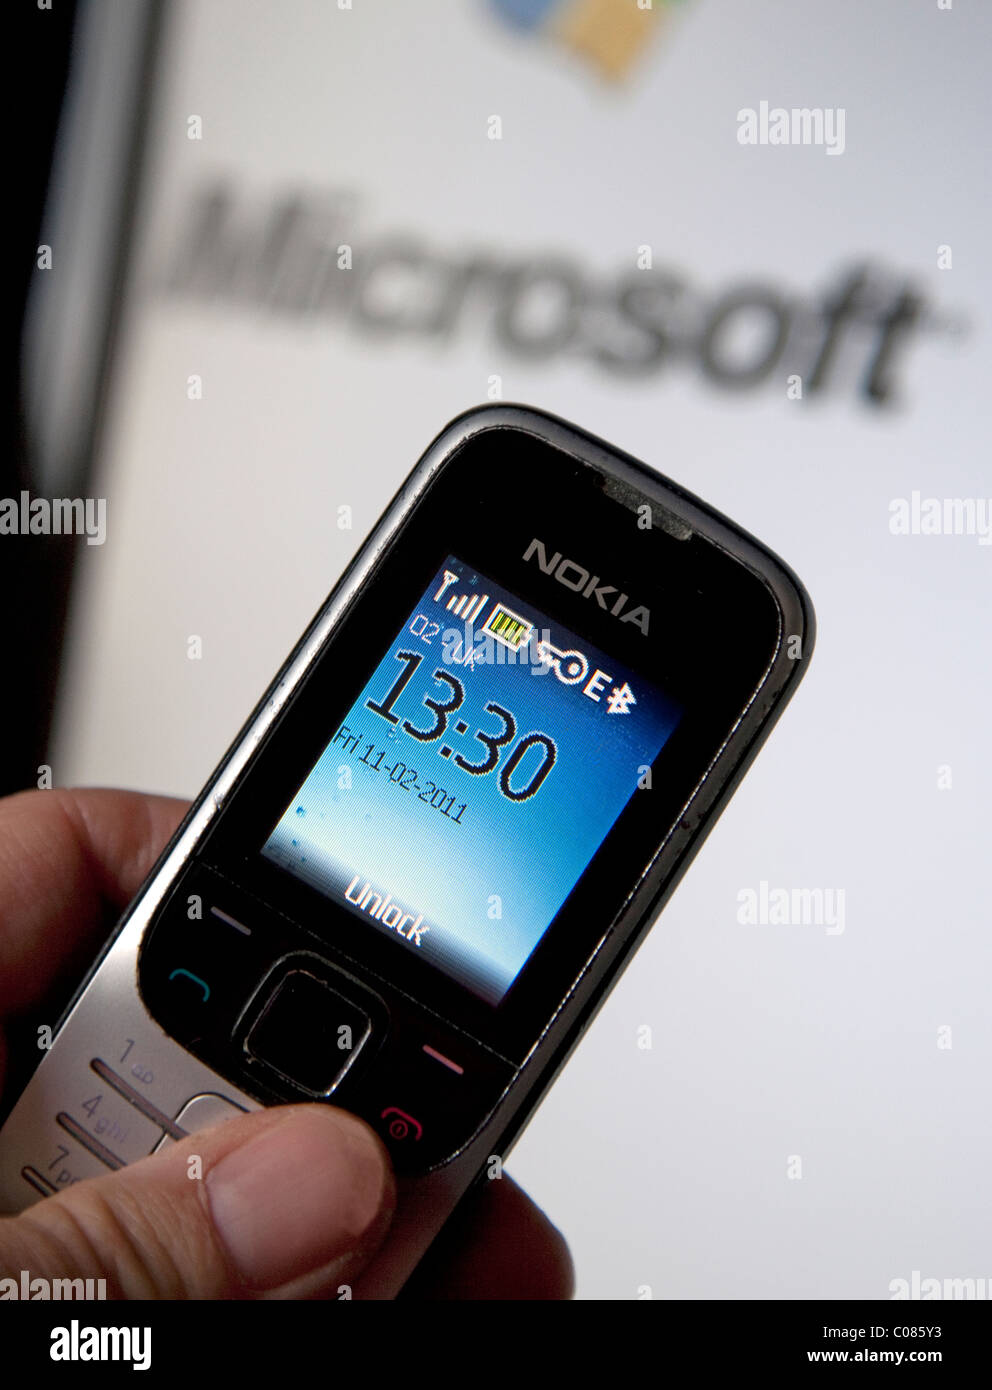 Nokia mobile phone and Microsoft logo on computer screen Stock Photo